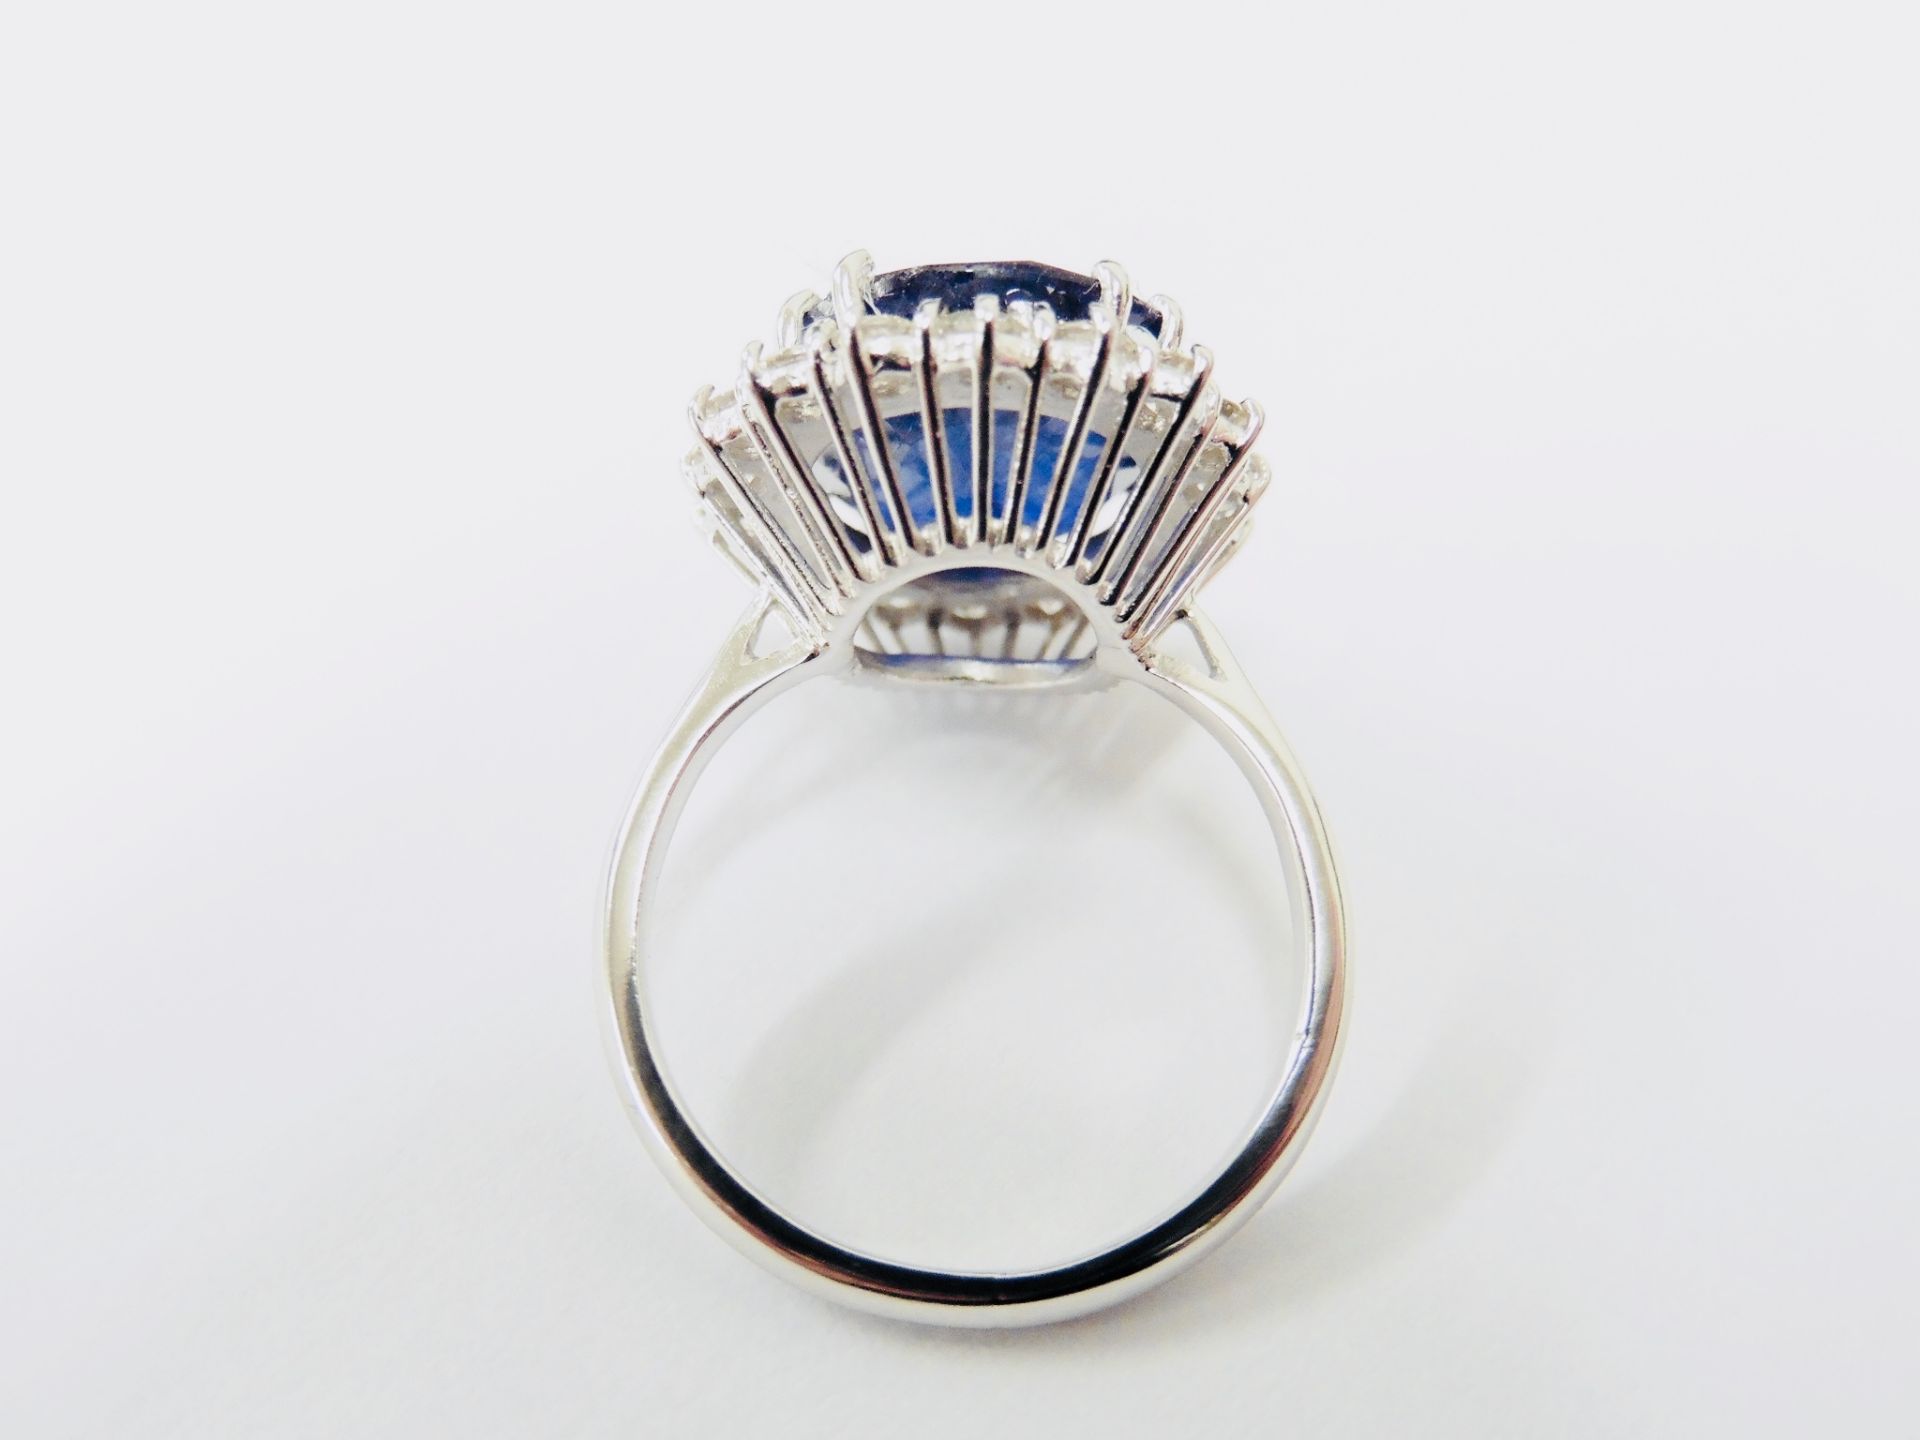 9ct Sapphire Diamond cluster ring,9ct sapphire natural(treated),1.30ct brilliant cut diamonds si2 - Image 4 of 5